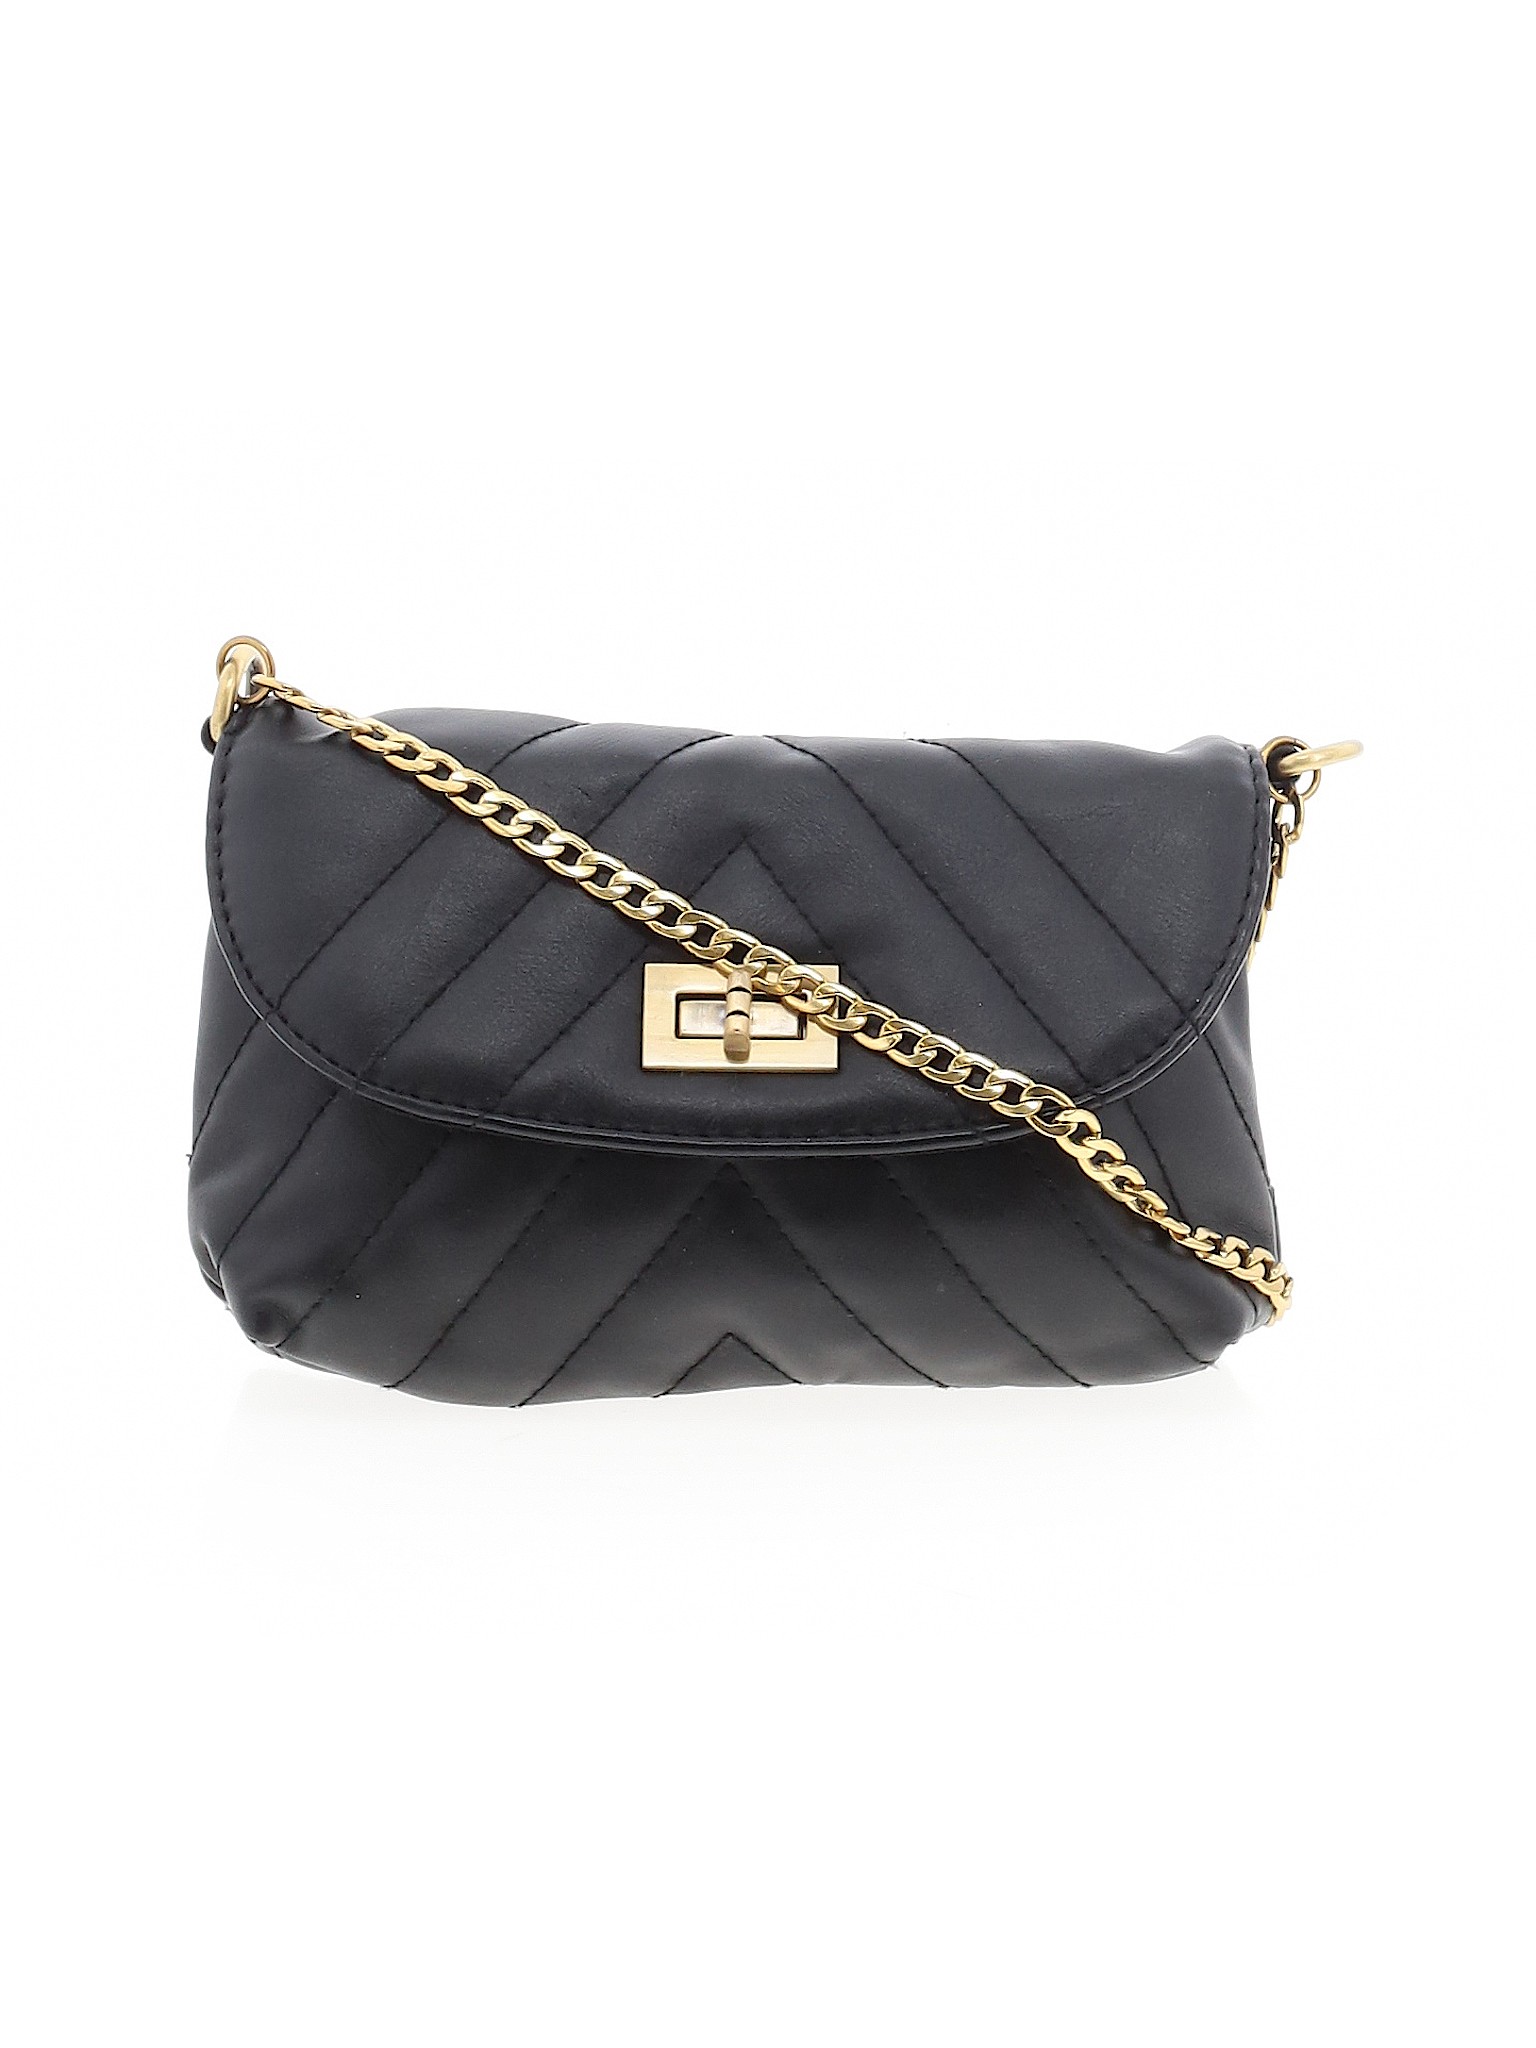 Target Limited Edition Women Black Crossbody Bag One Size | eBay